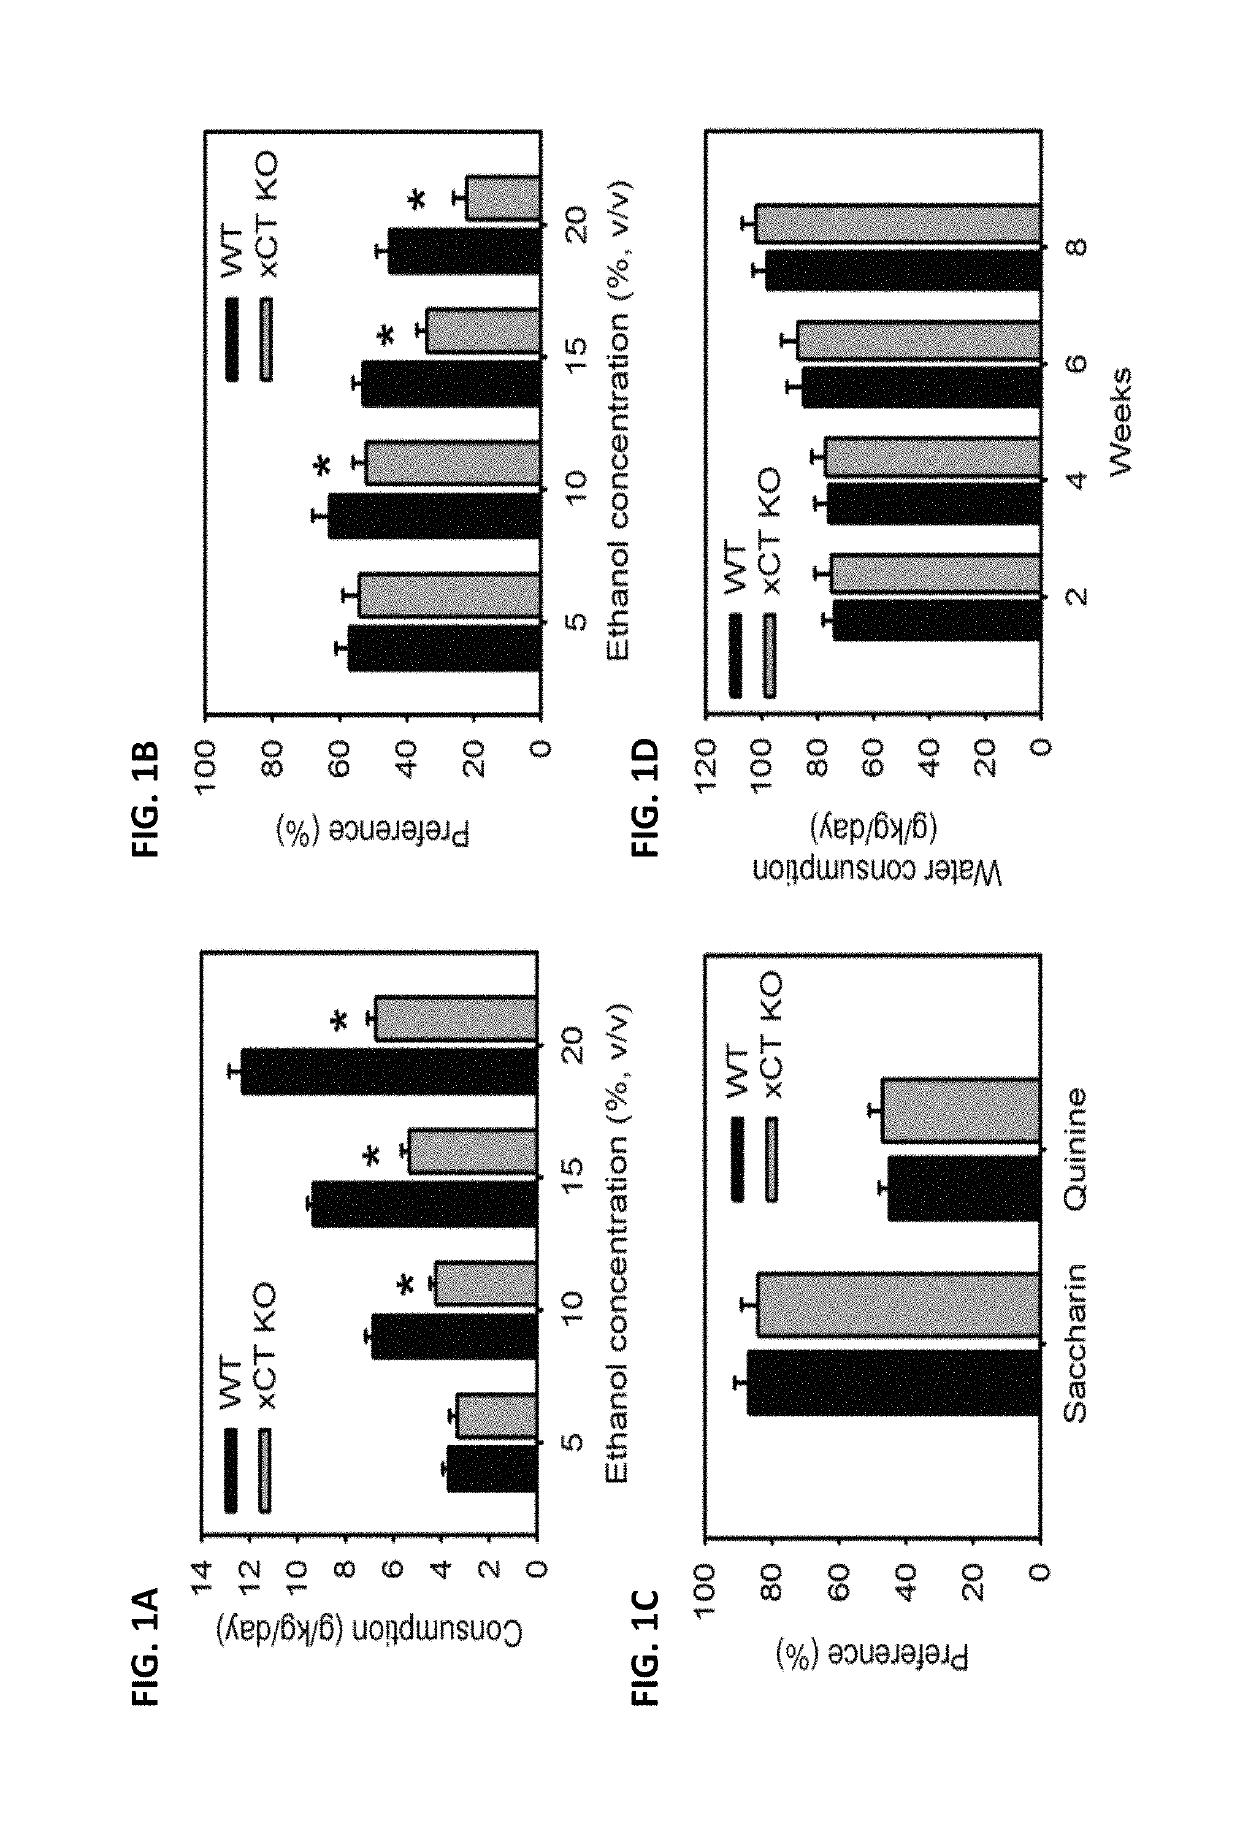 Use of inhibitor of cystine-glutamate transporter